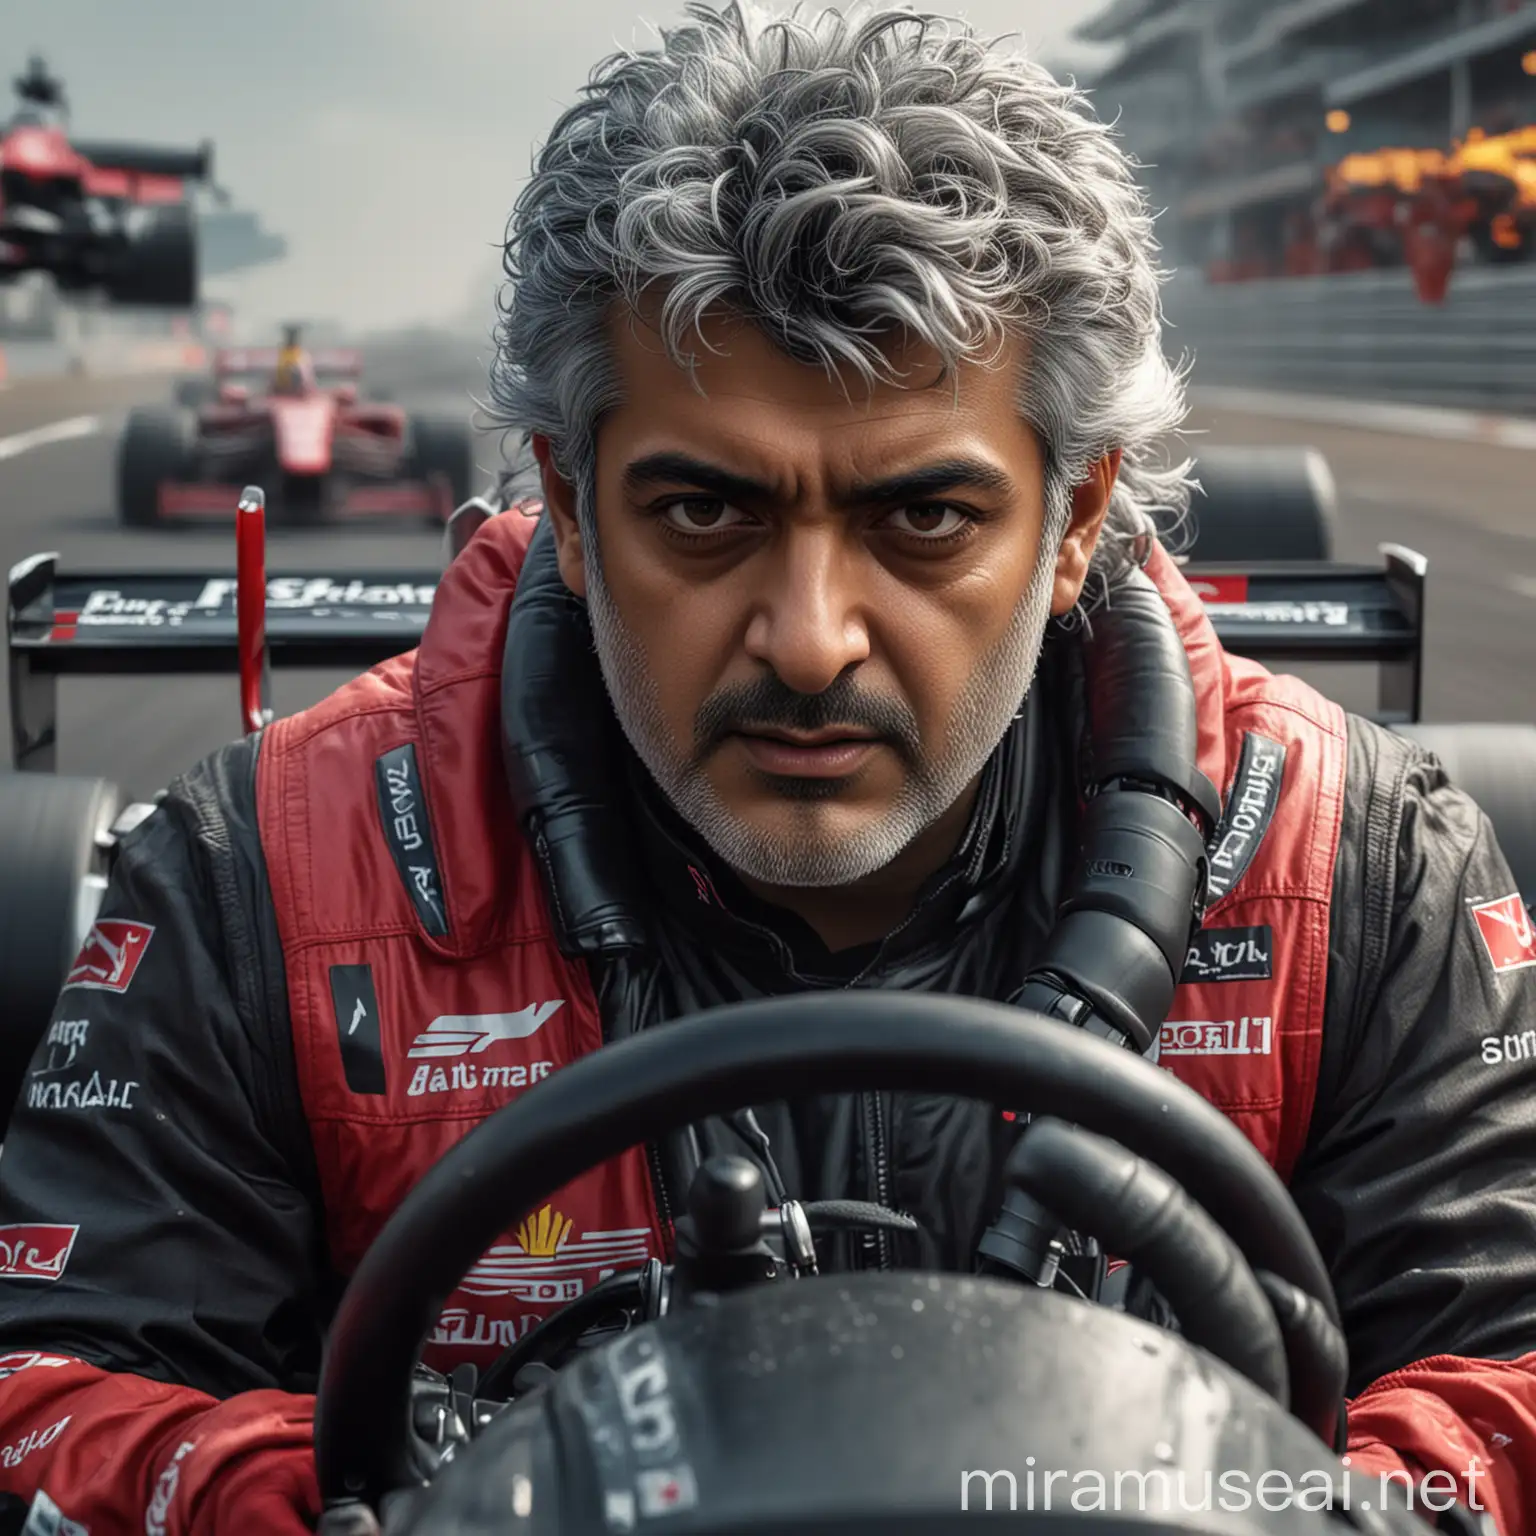 Ajith Kumar Racing a Red F1 Car in Cyberpunk Setting